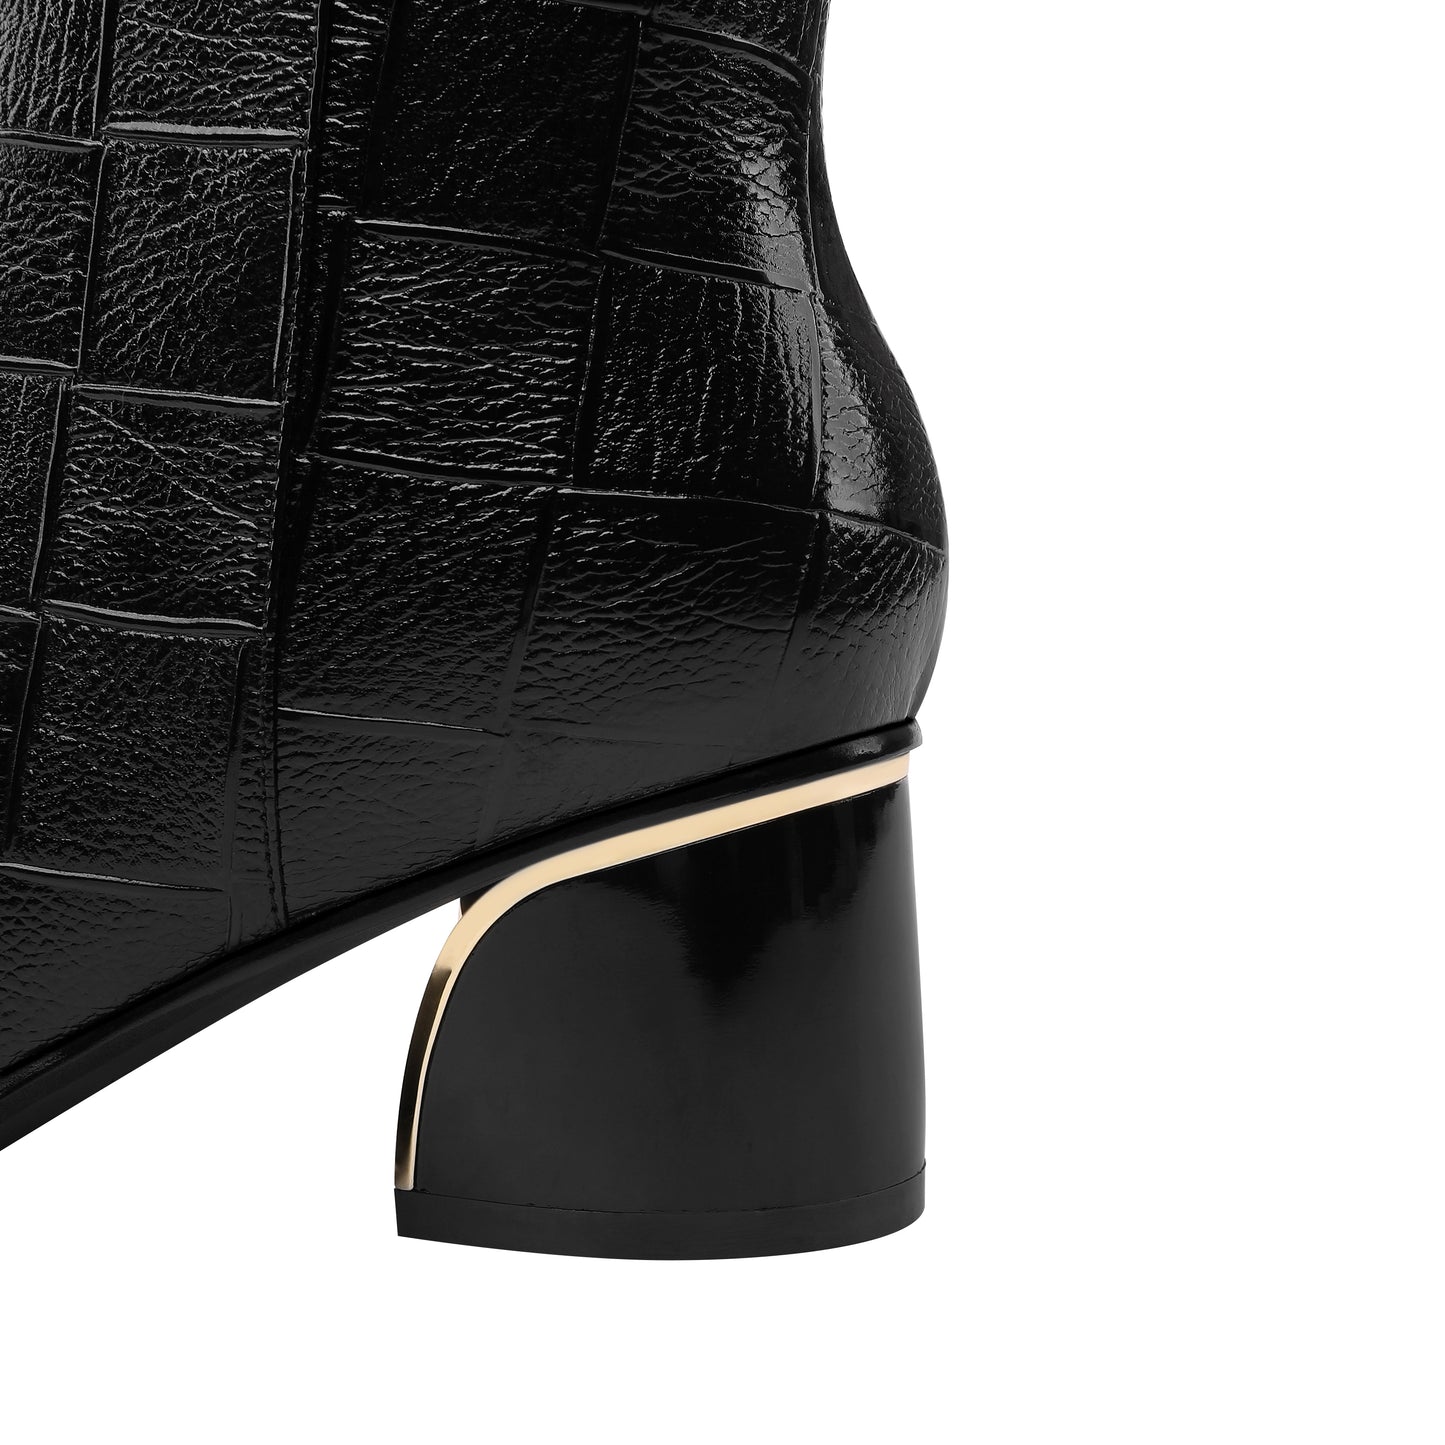 TinaCus Women's Handmade Leather Side Zip Up Rhinestone Decor Chunky Heel Mid-Calf Boots with Glossy Cap-Toe